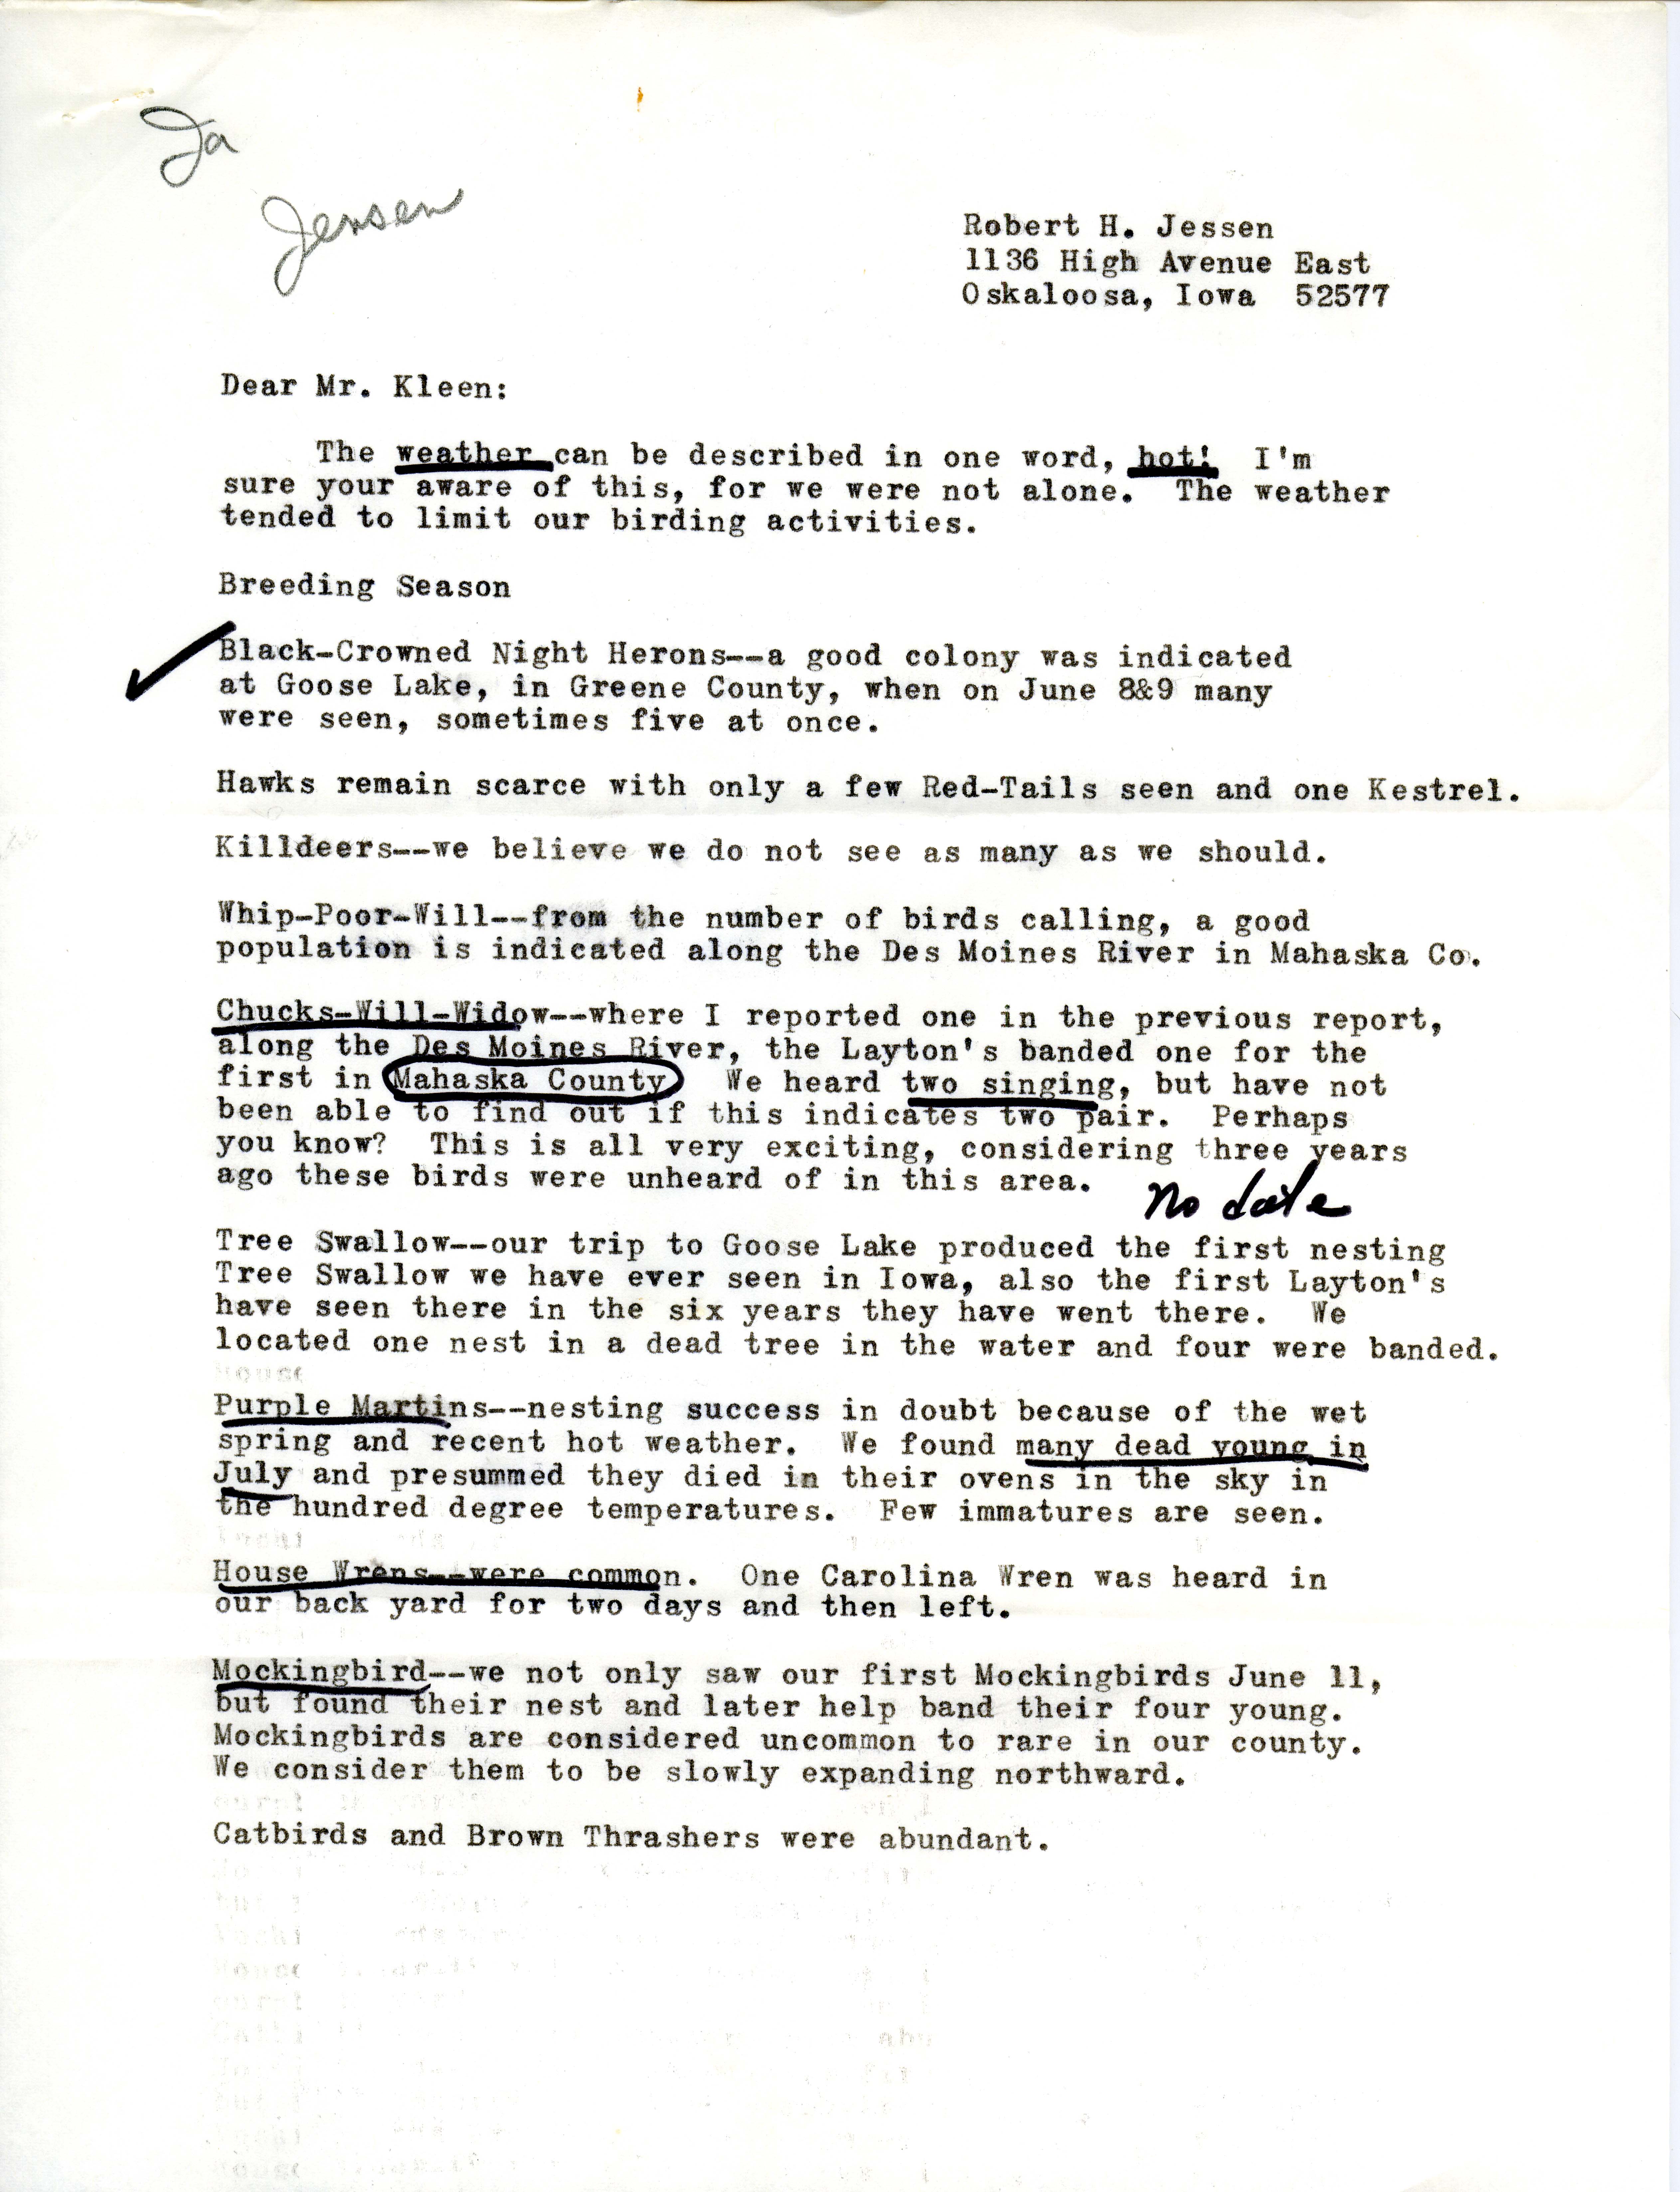 Letter from Robert Jessen to Vernon M. Kleen regarding birds sighted near Oskaloosa, summer 1974